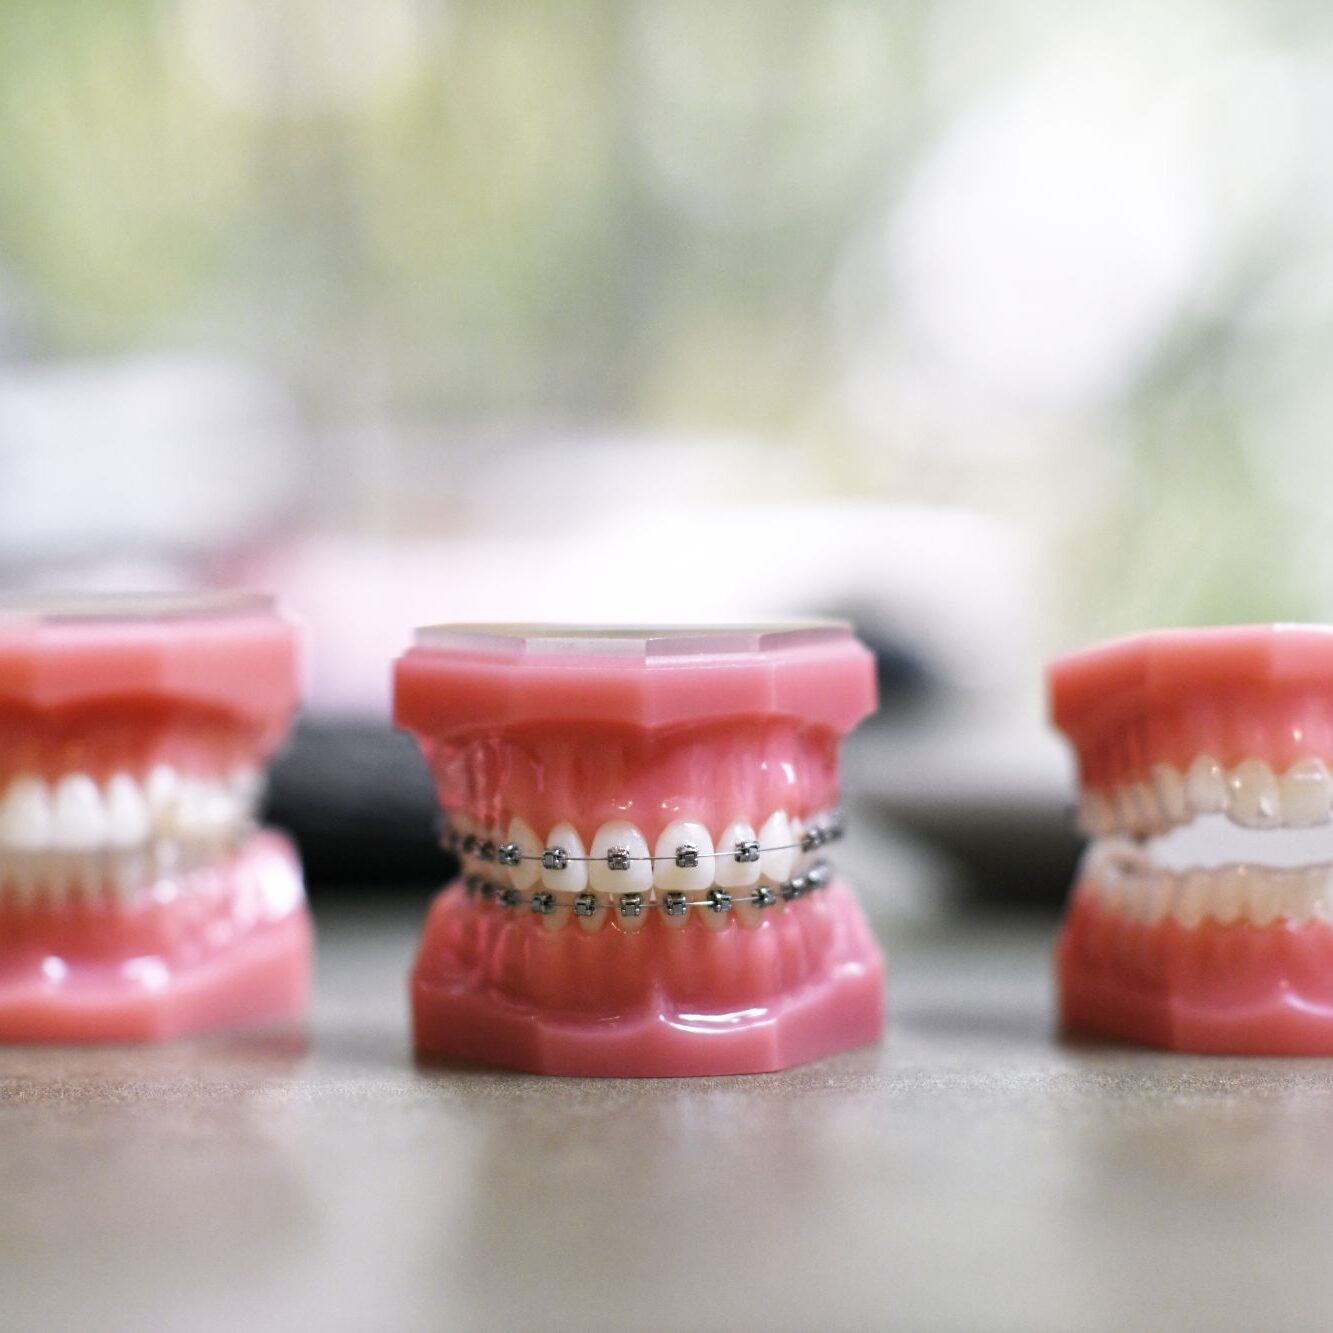 Christian Manley Orthodontics tooth models